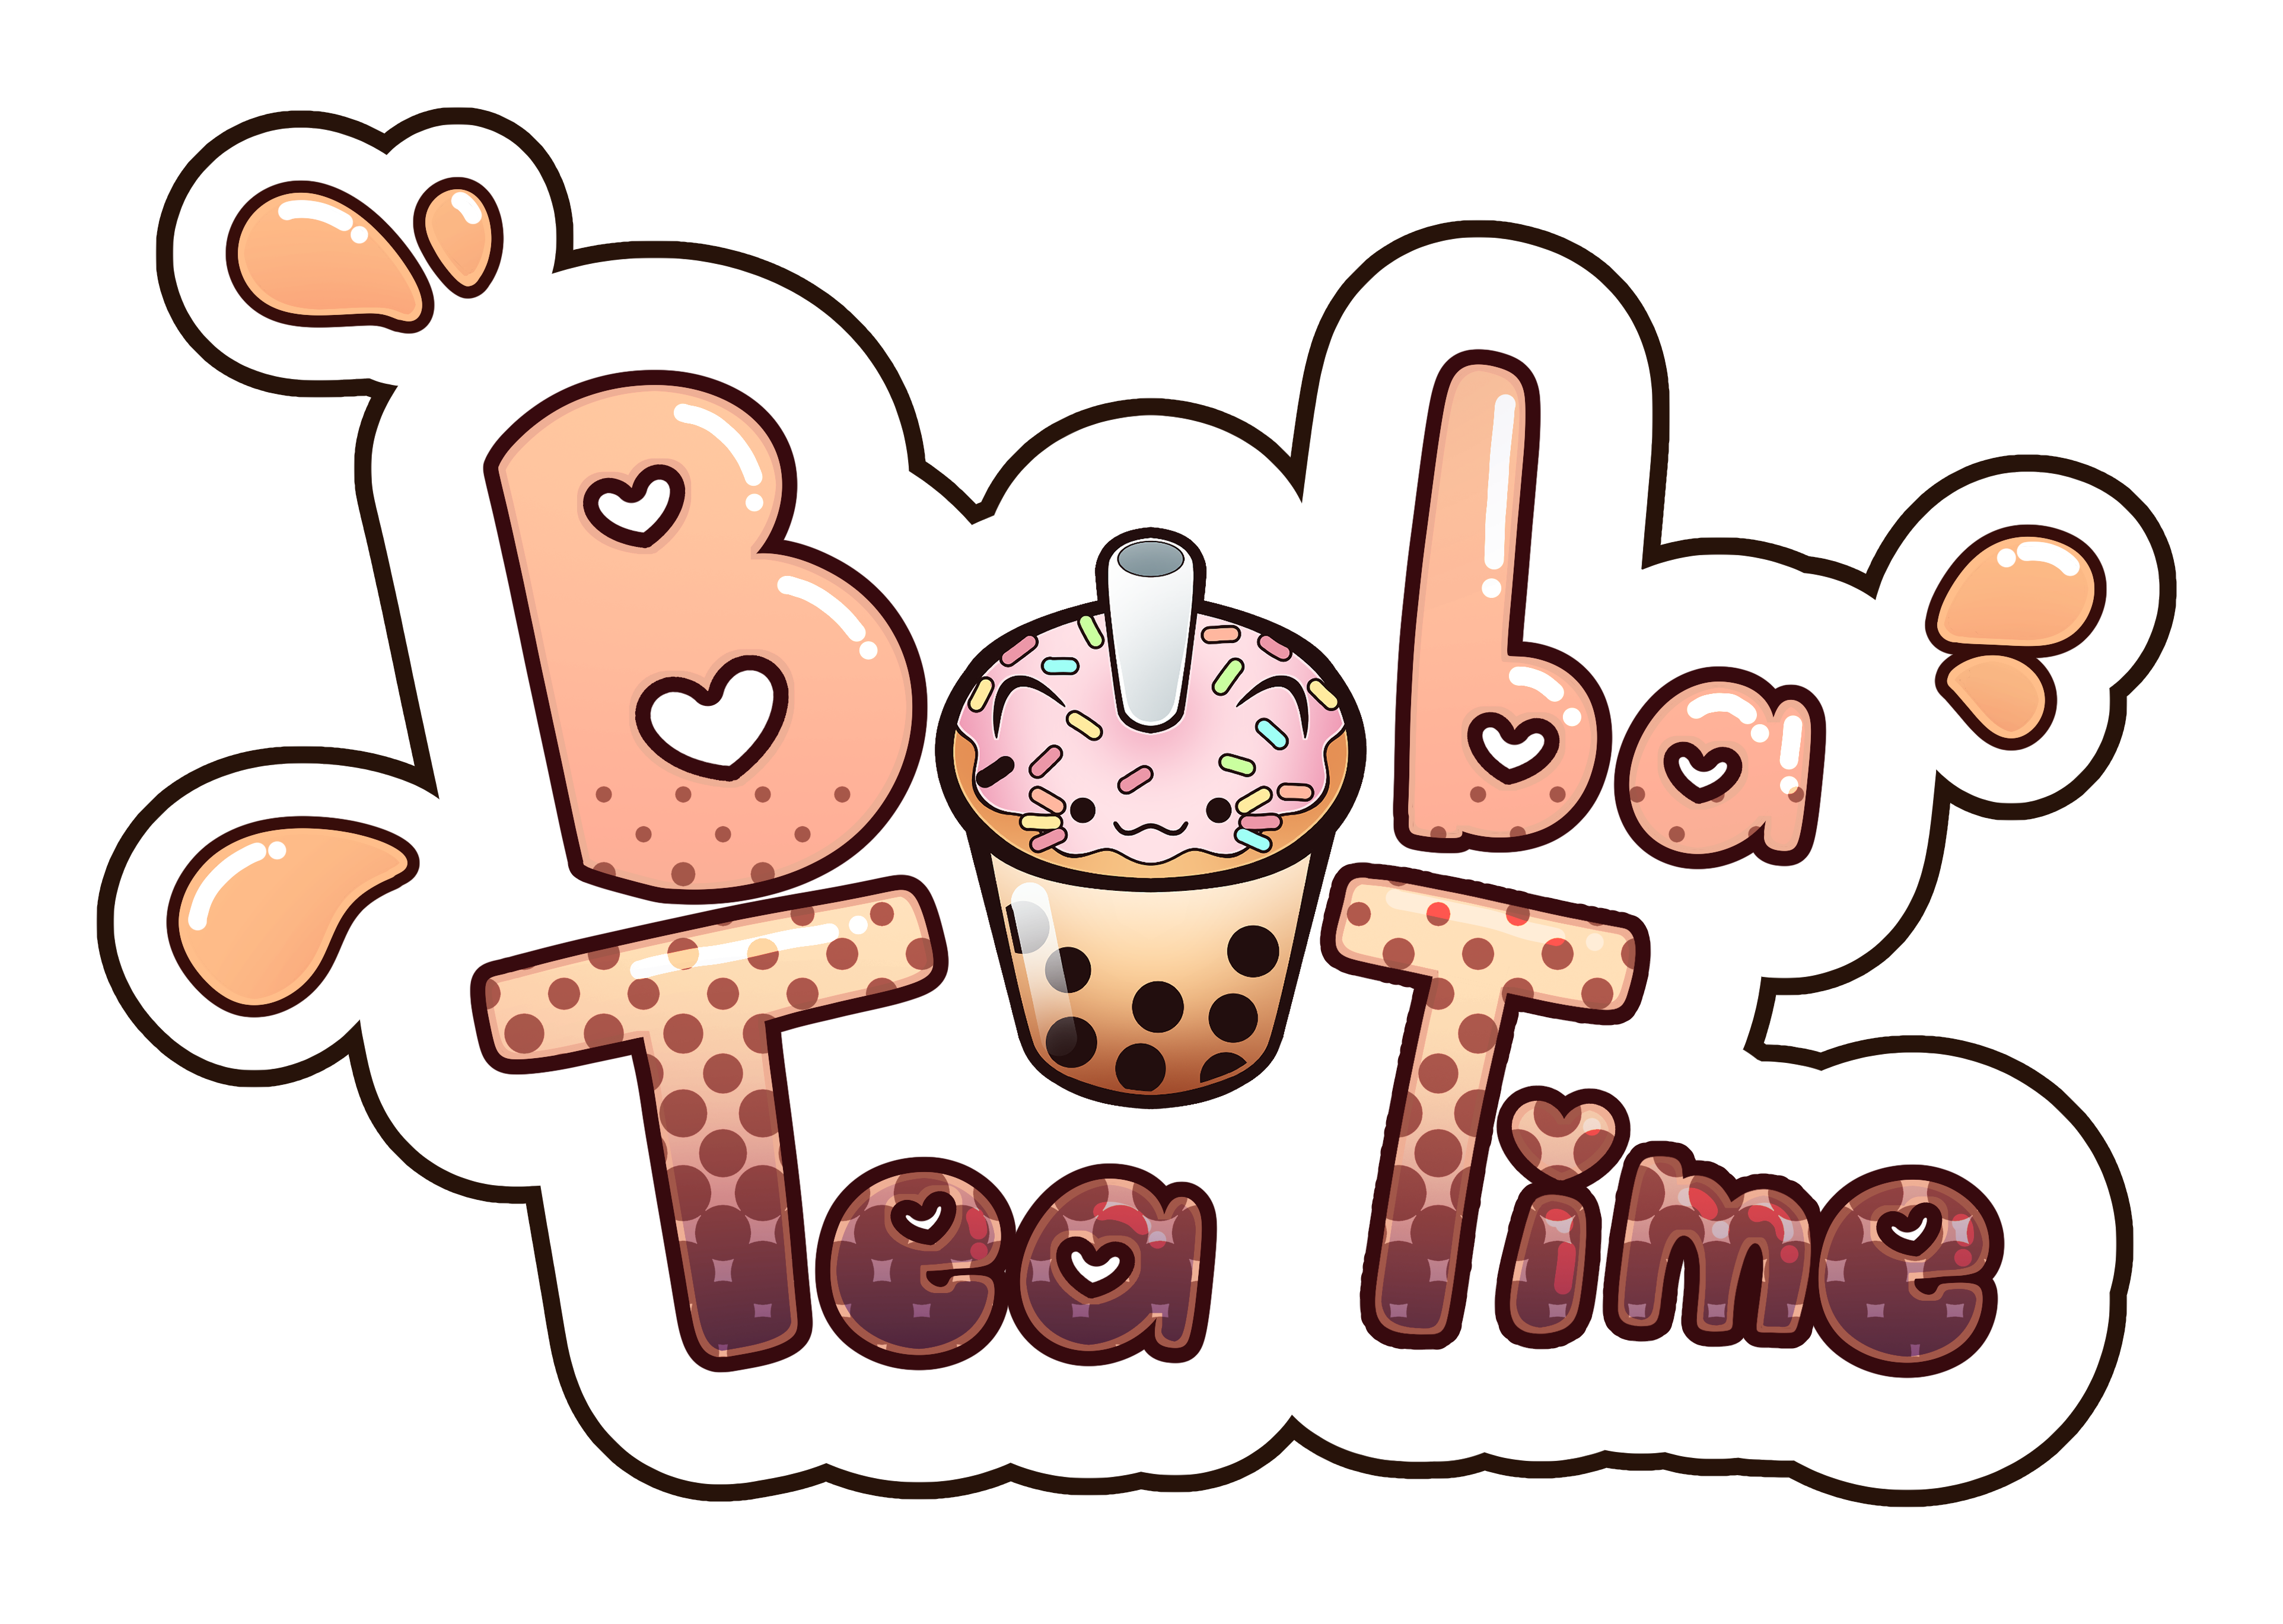 boba tea time color 2